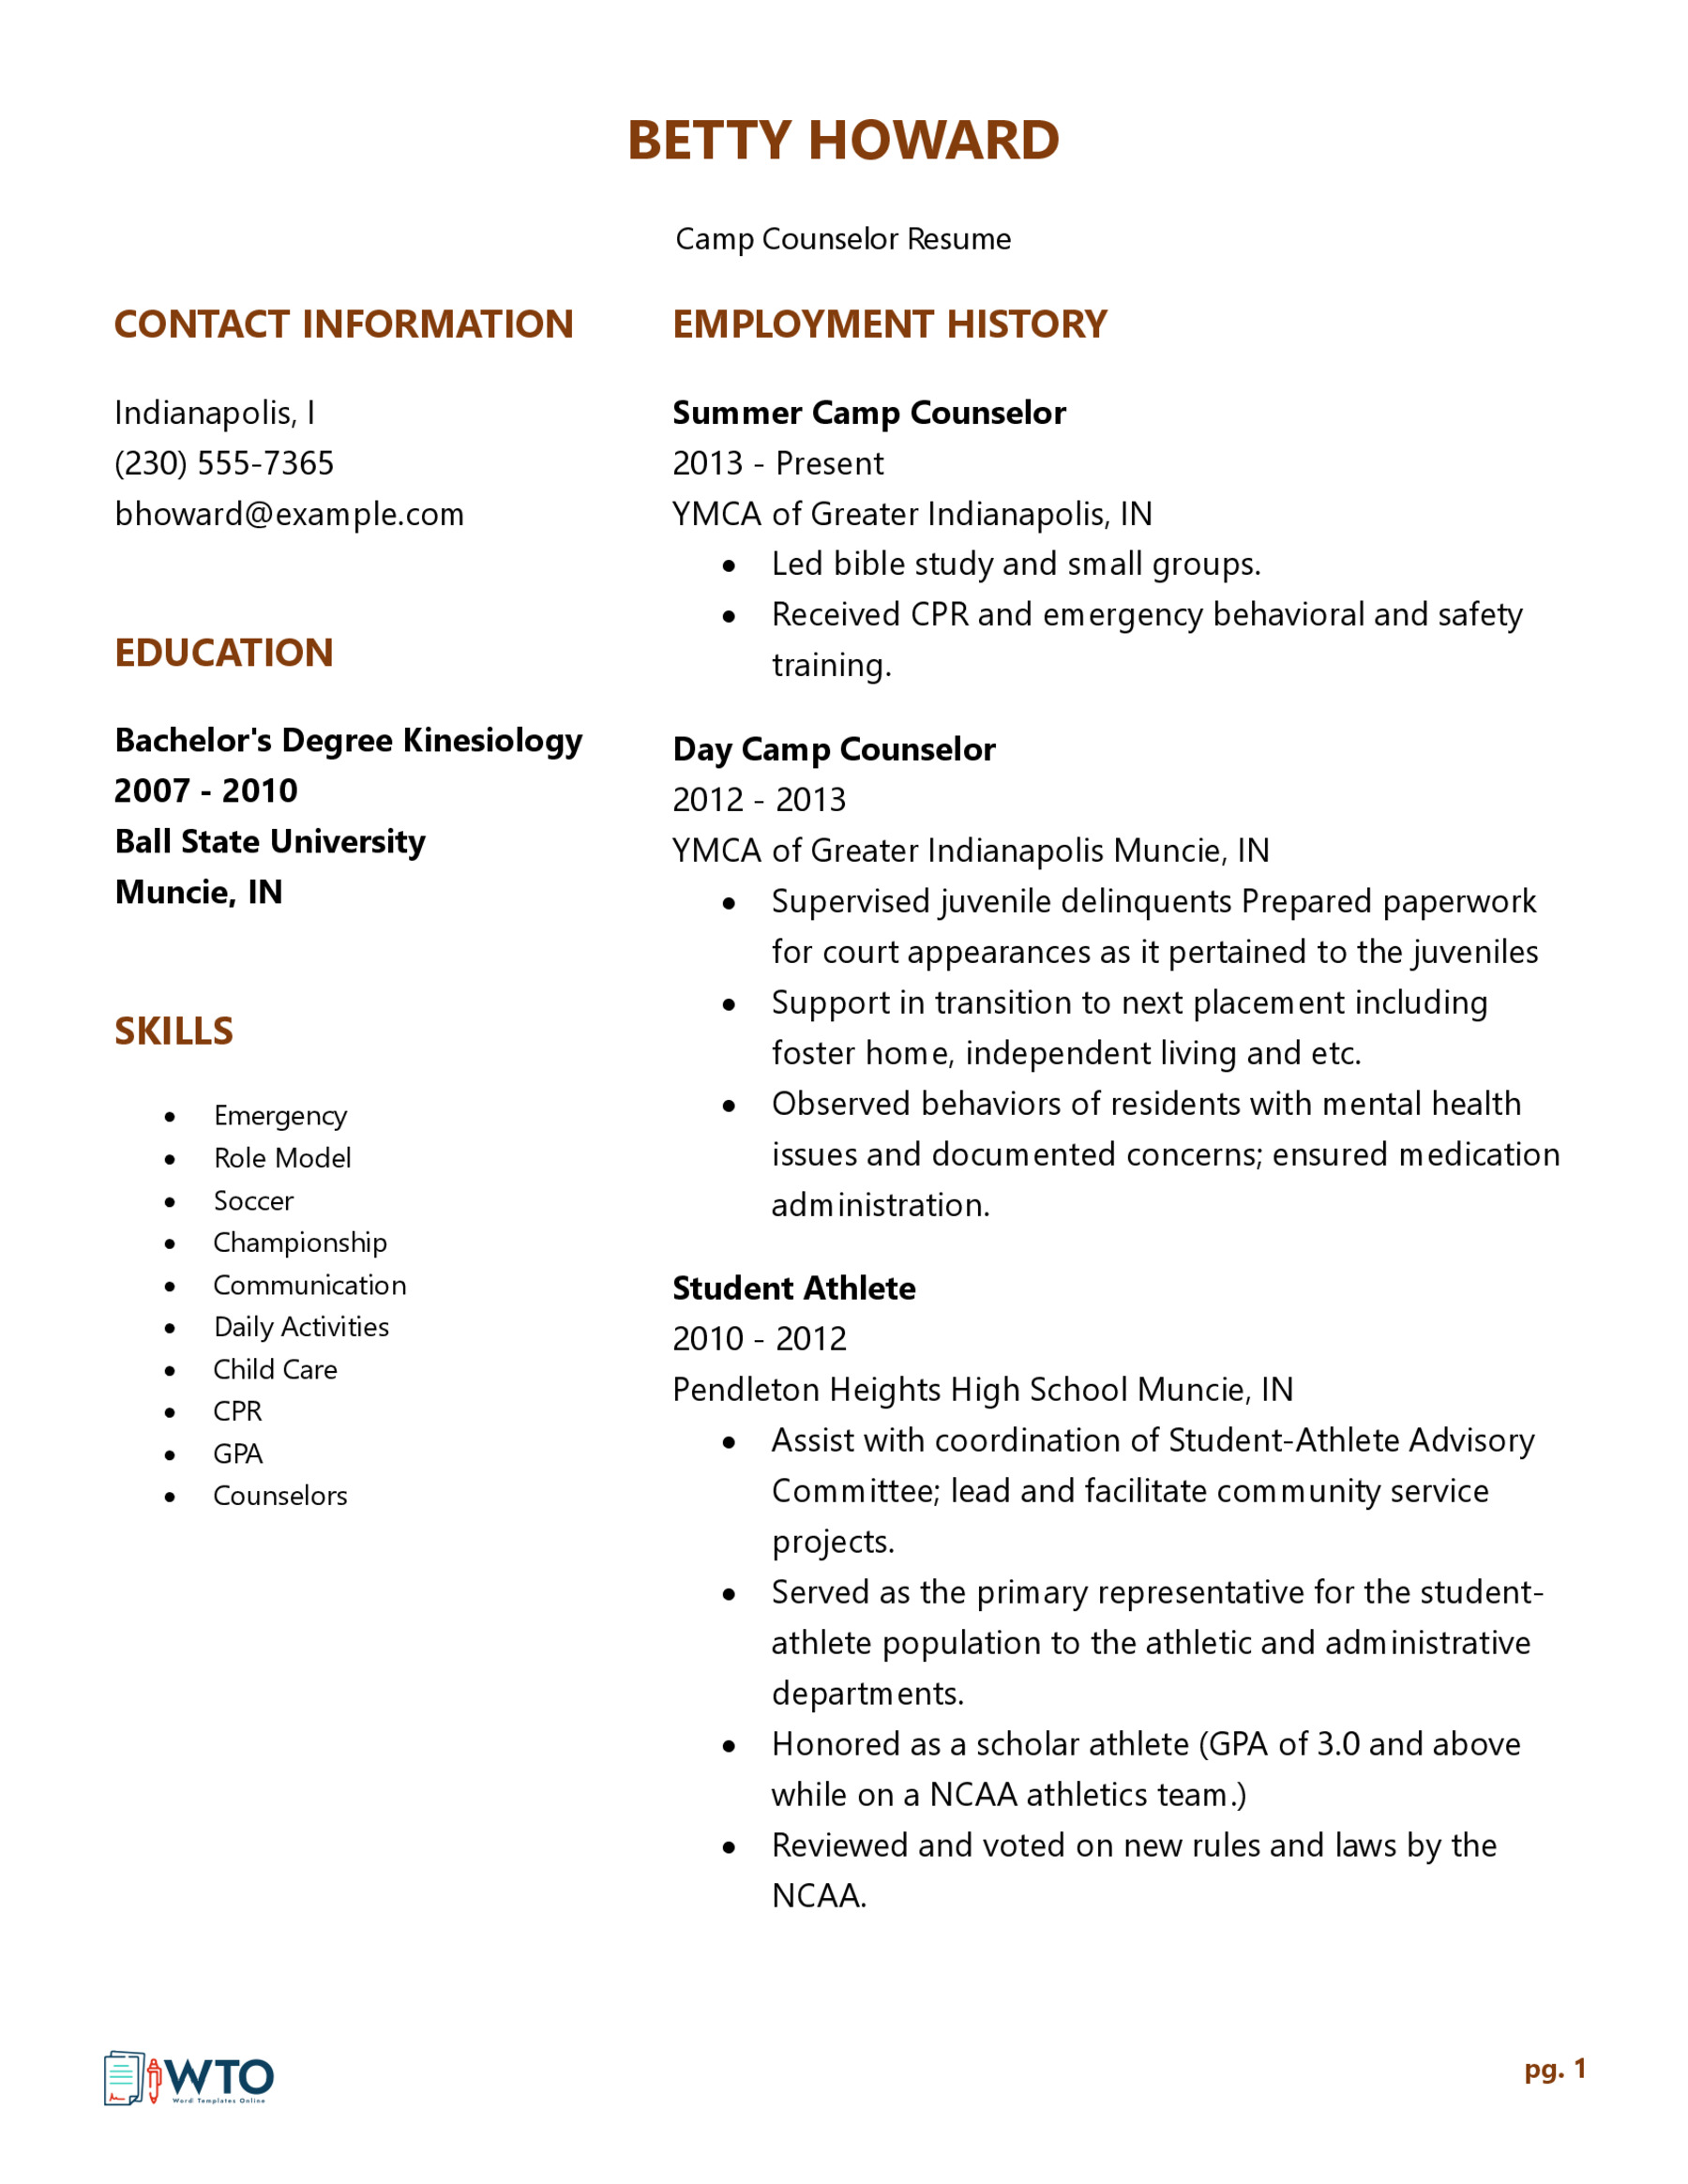 Camp Counselor Resume Template - Customizable Format